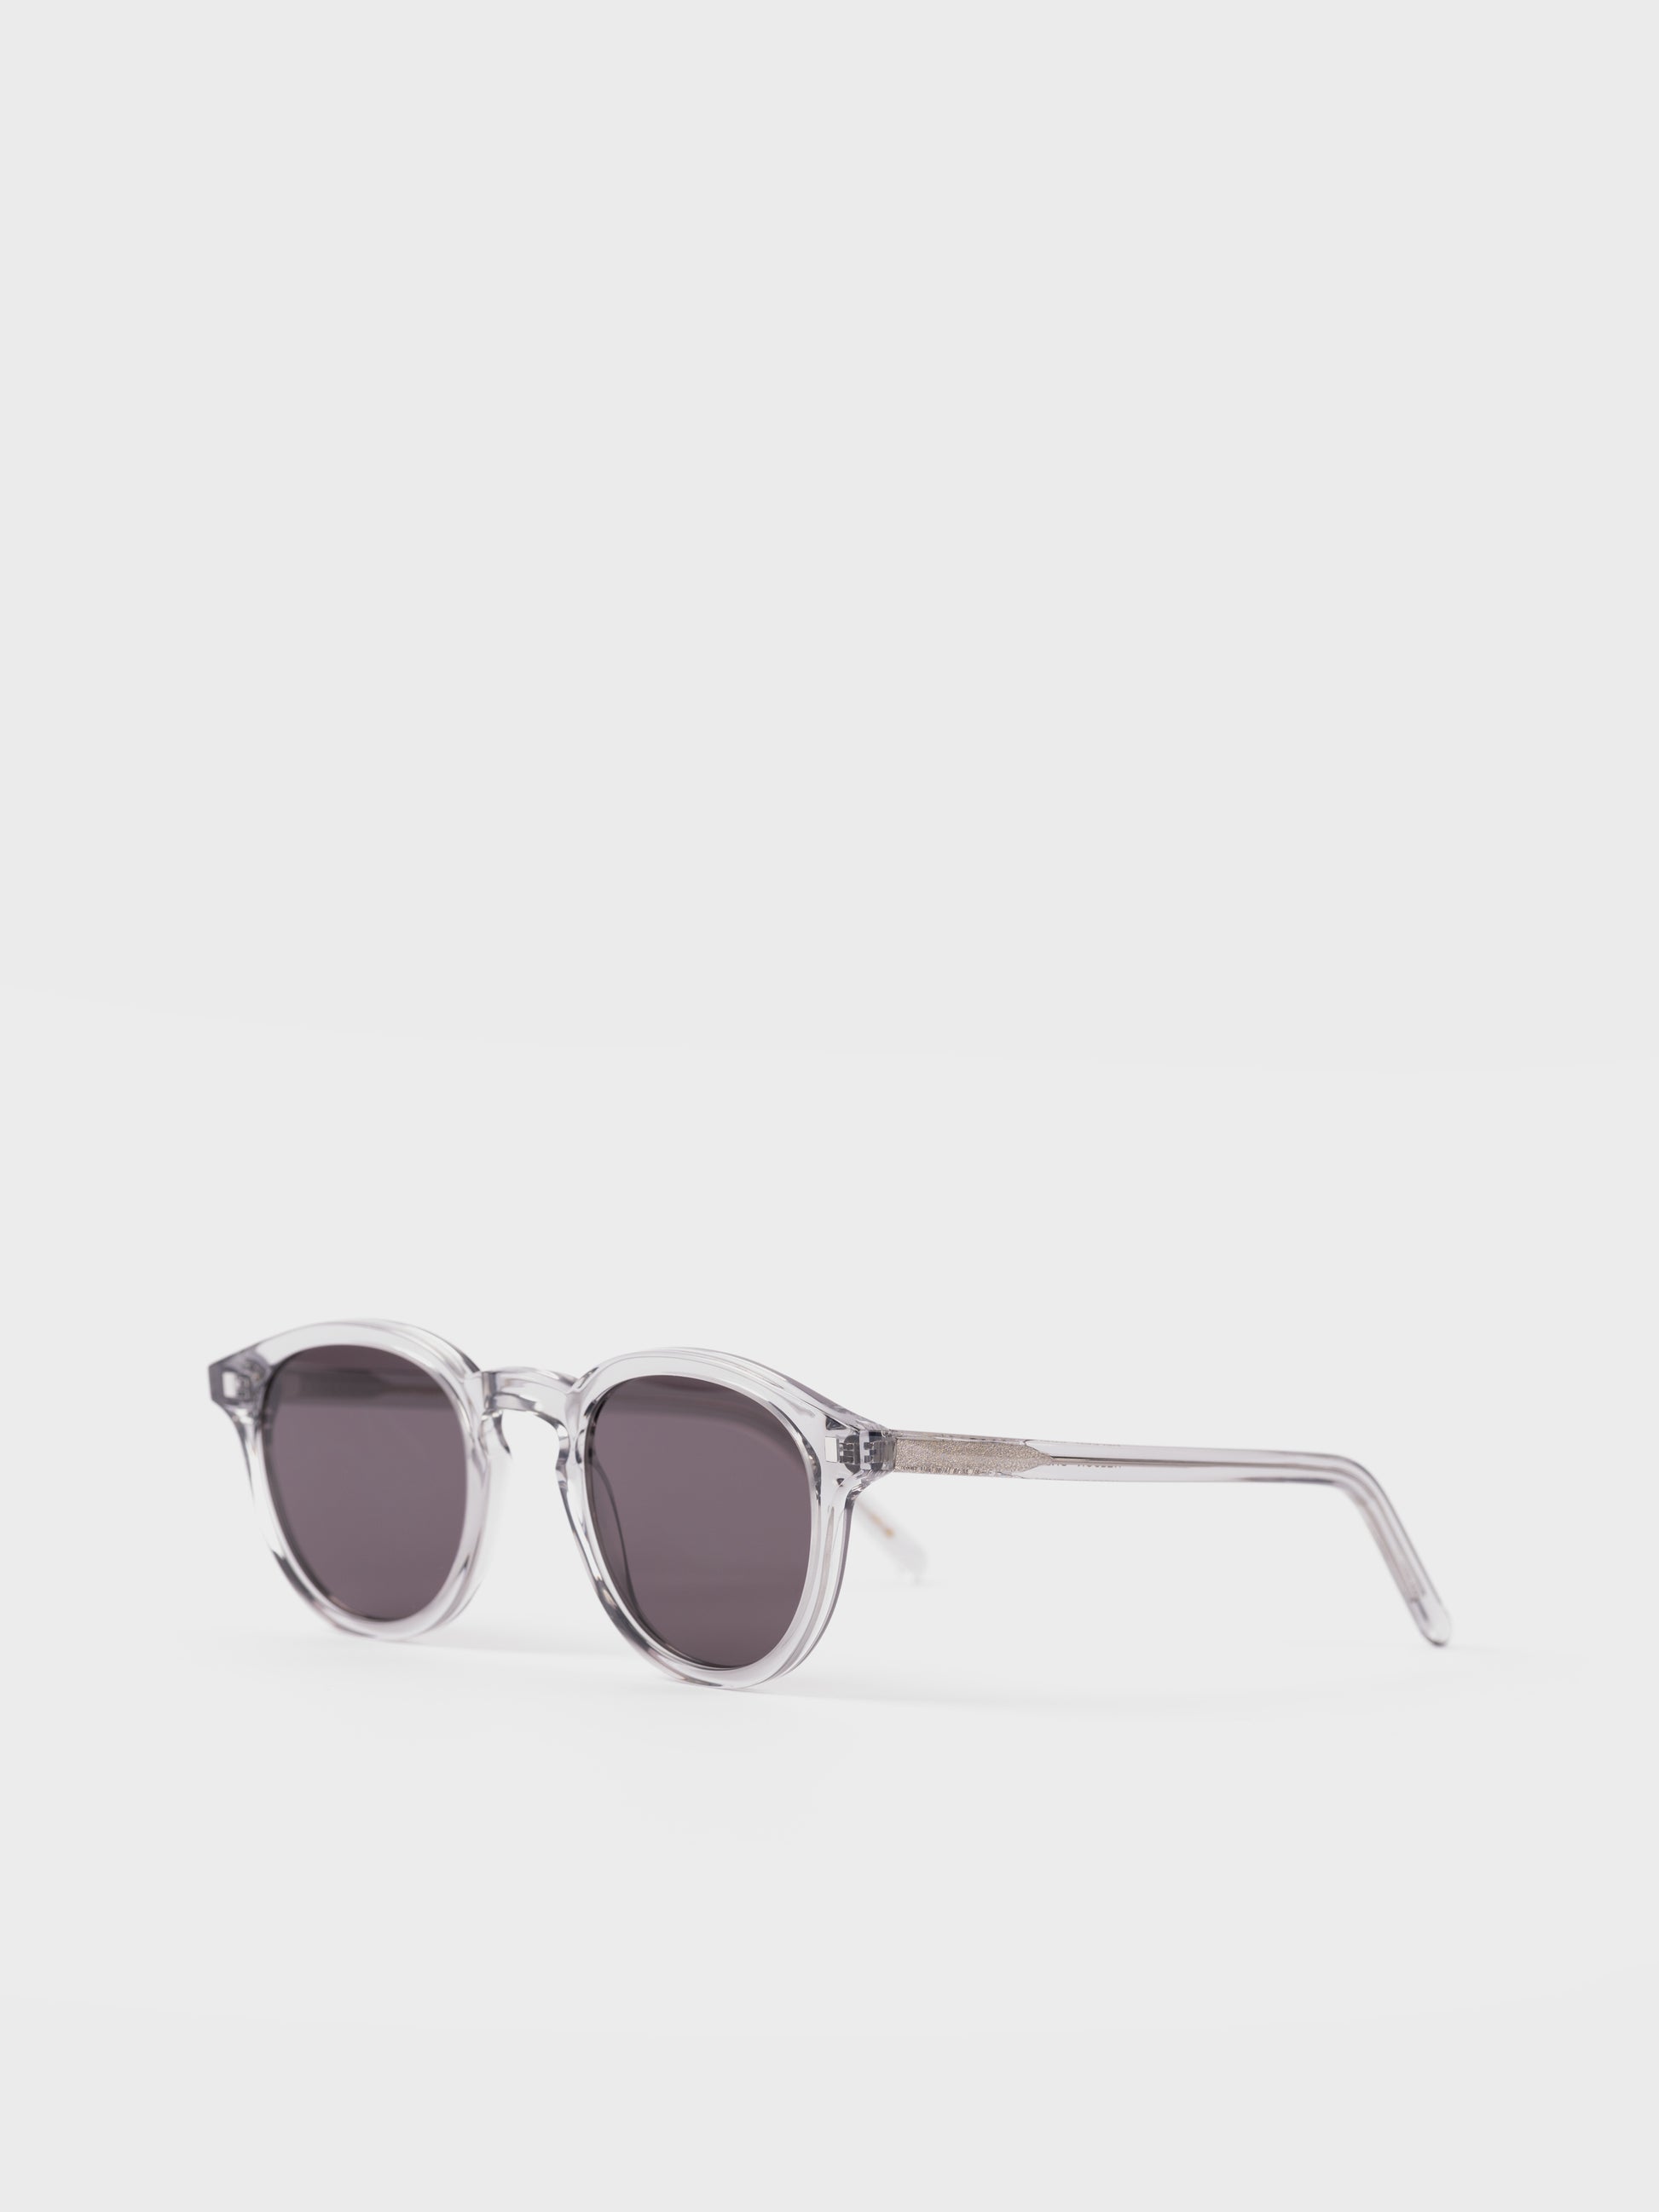 Monokel Sunglasses - Nelson Grey/Grey Lens